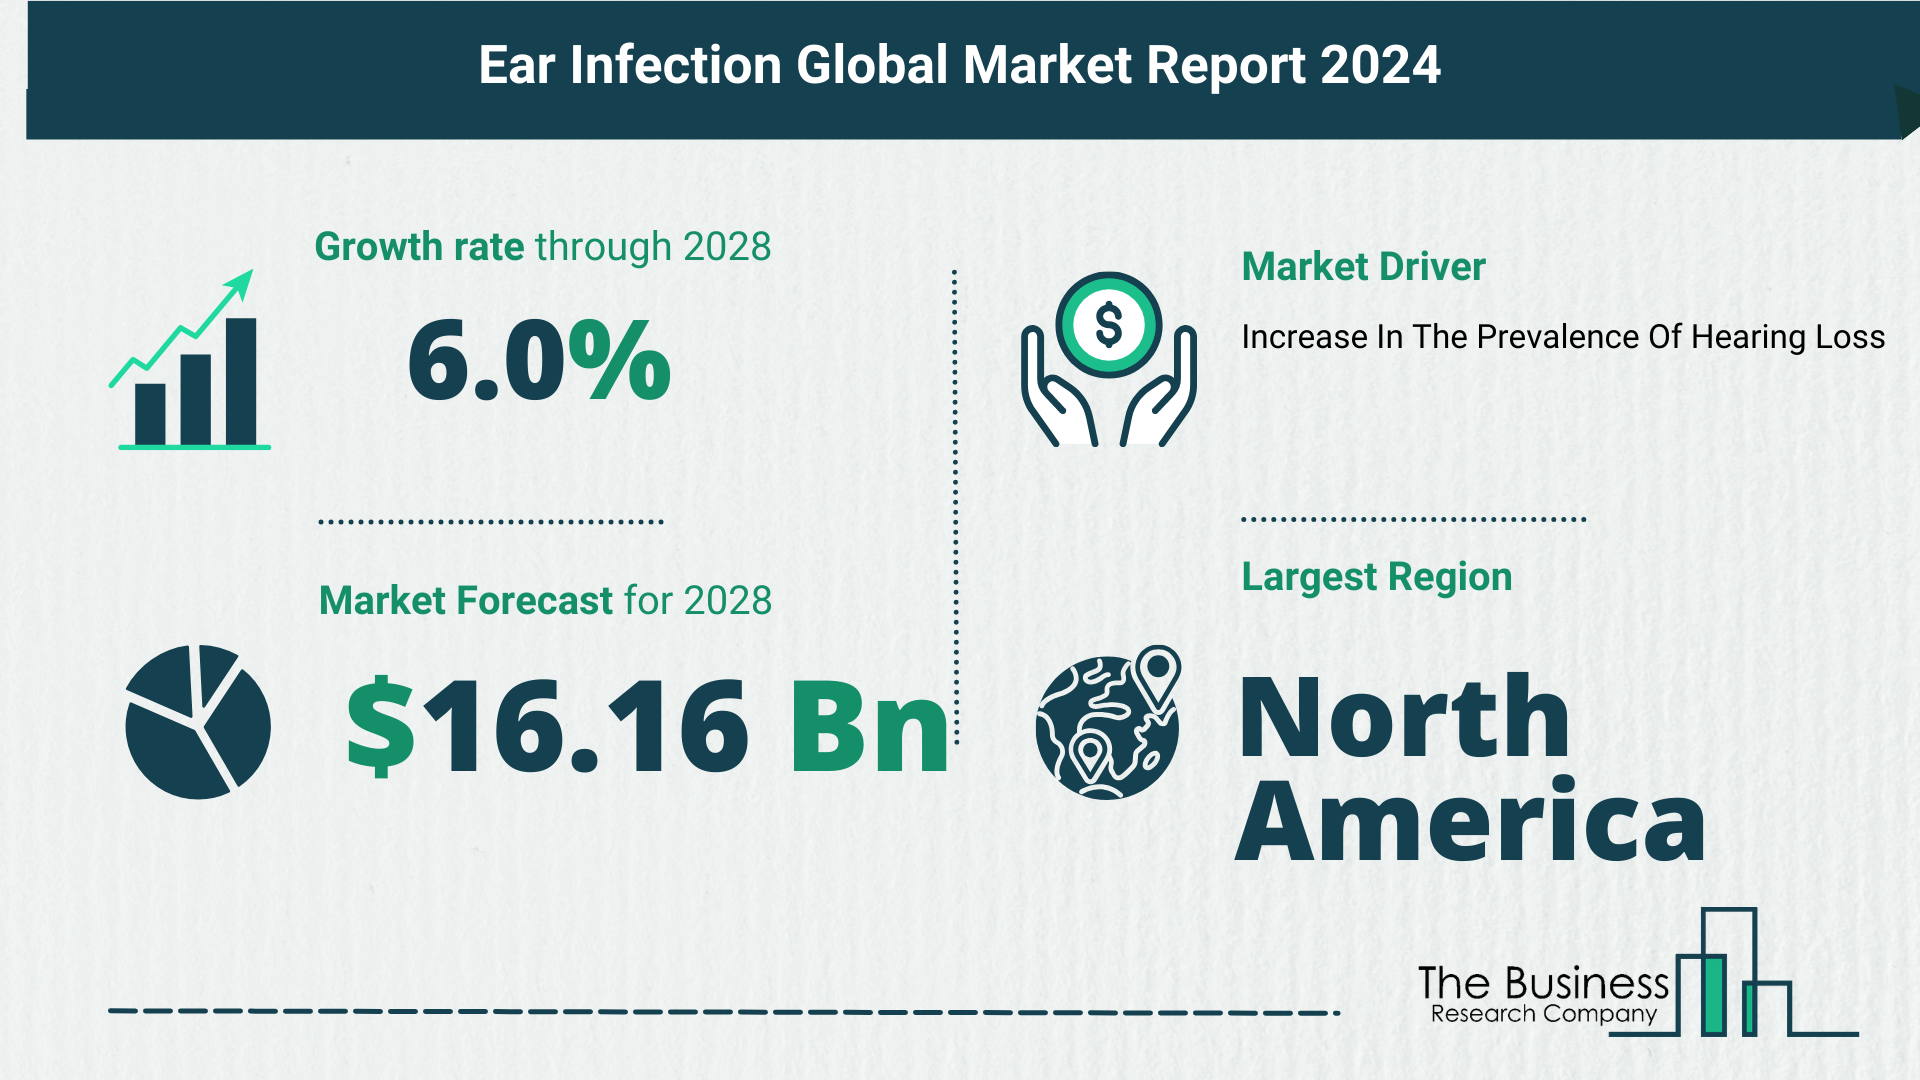 Global Ear Infection Market